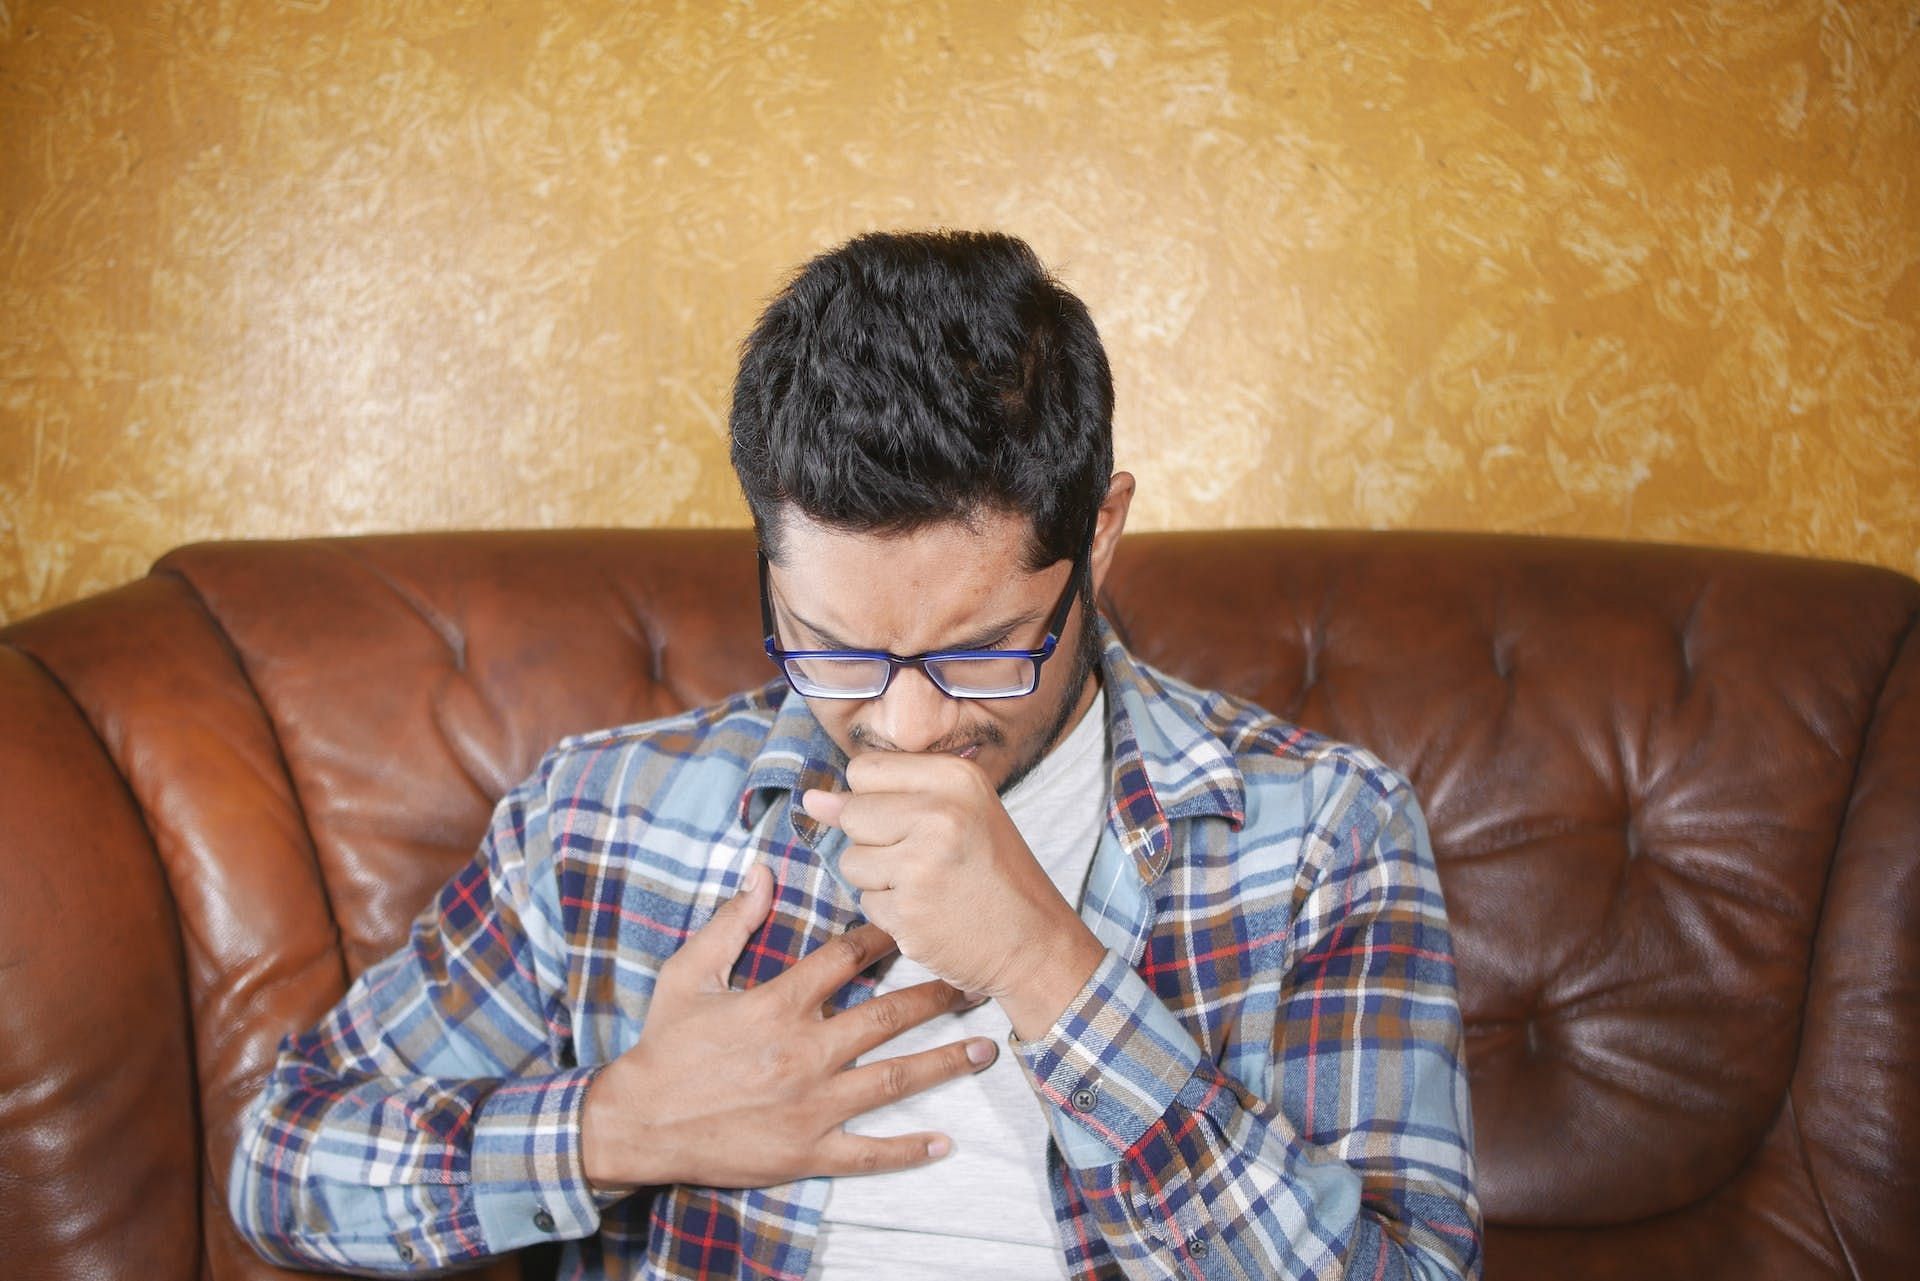 Symptoms of dysphagia includes extreme cough, choking and more. (Image via Pexels/Towfiqu barbhuiya)